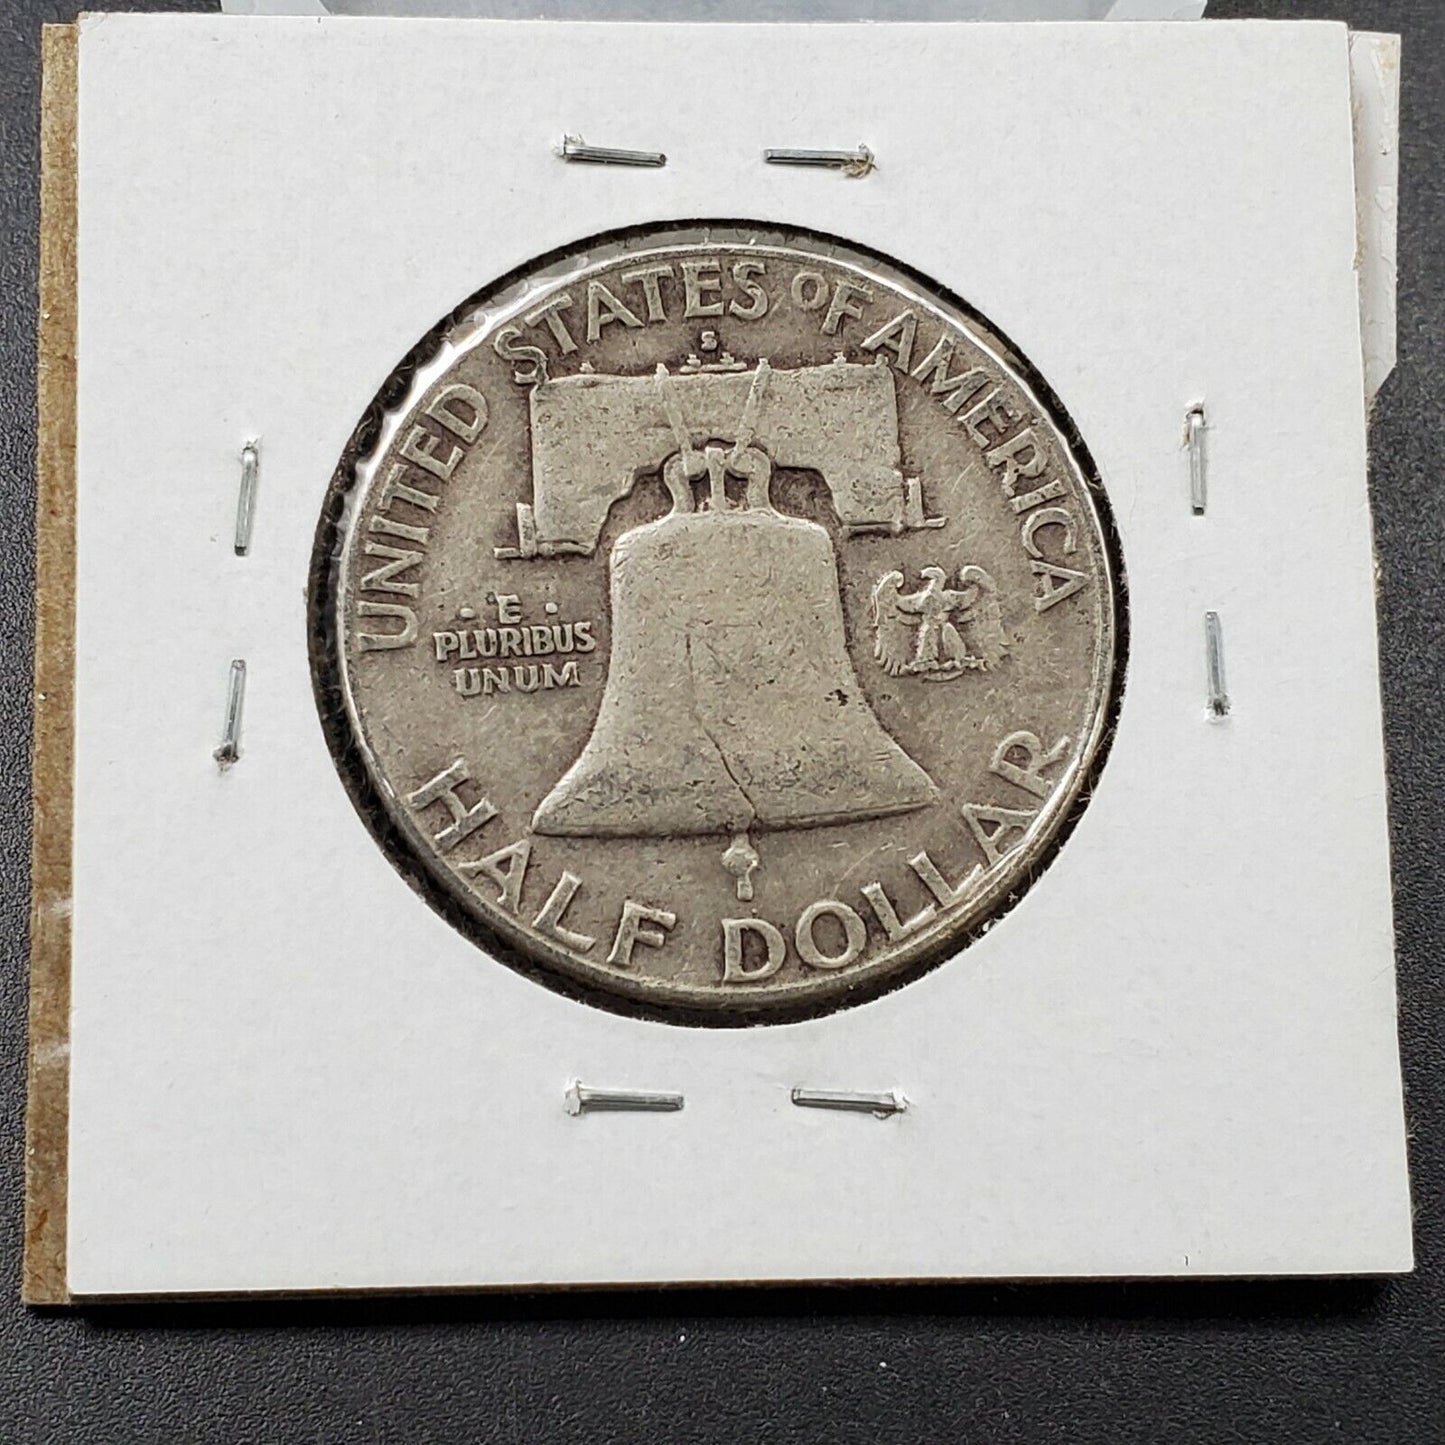 1954 S Franklin Silver Half Dollar Coin AVG VF VERY FINE CIRCULATED CONDITION